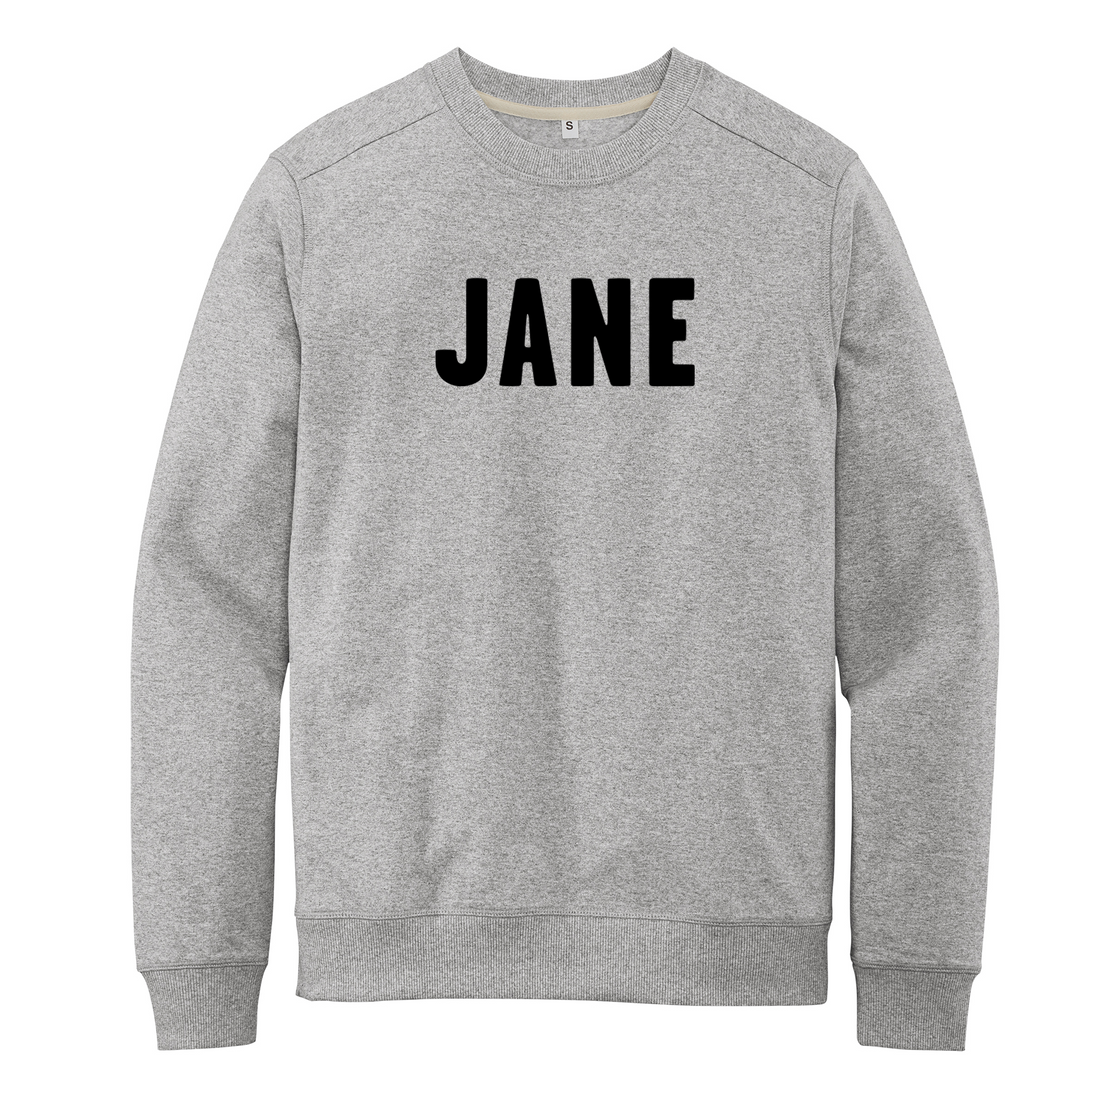 Unisex JANE Crewneck Sweatshirt in Grey with Black Letters